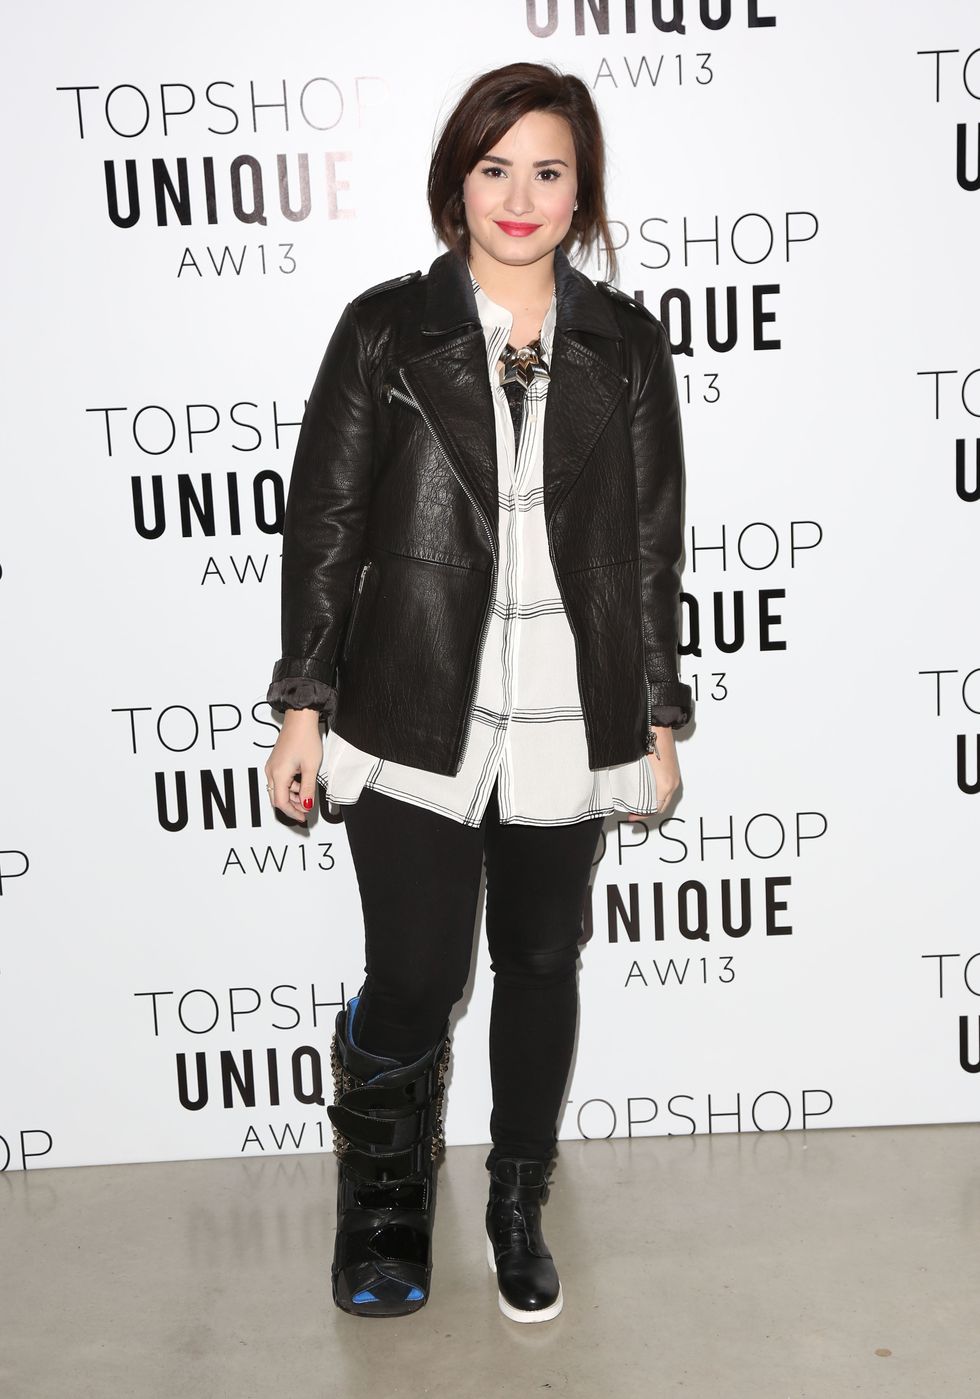 Lovato: I use fashion to express myself